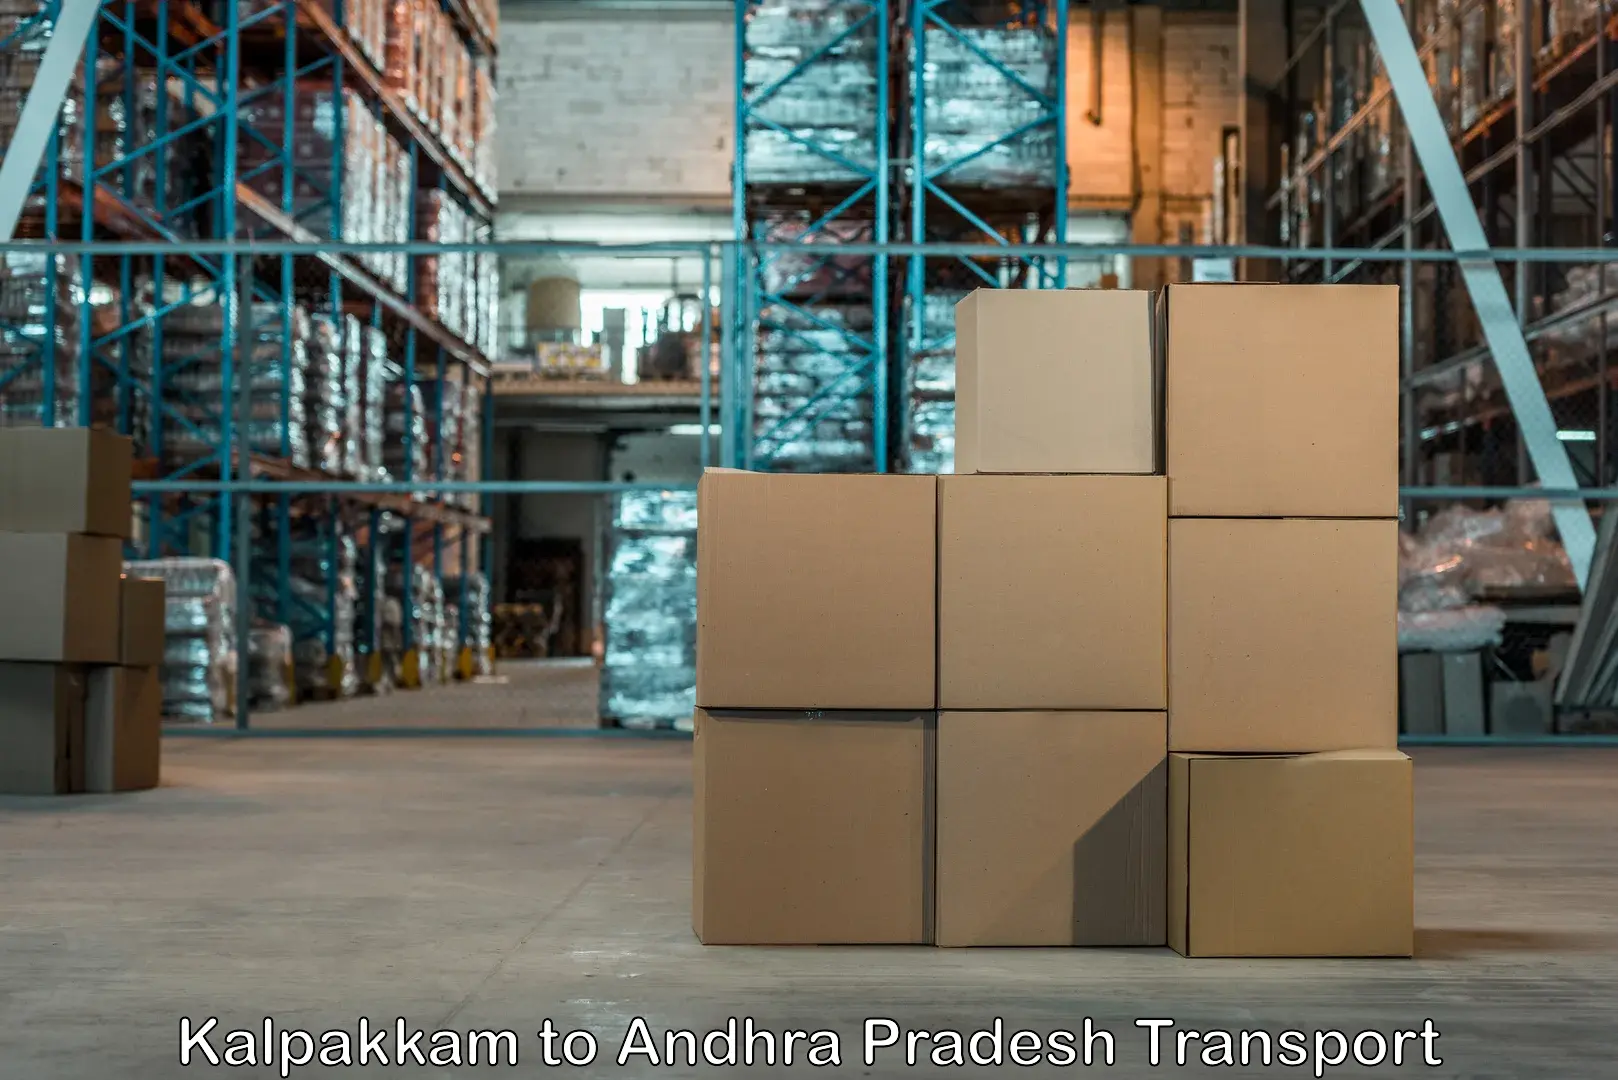 Truck transport companies in India Kalpakkam to Veldurthi